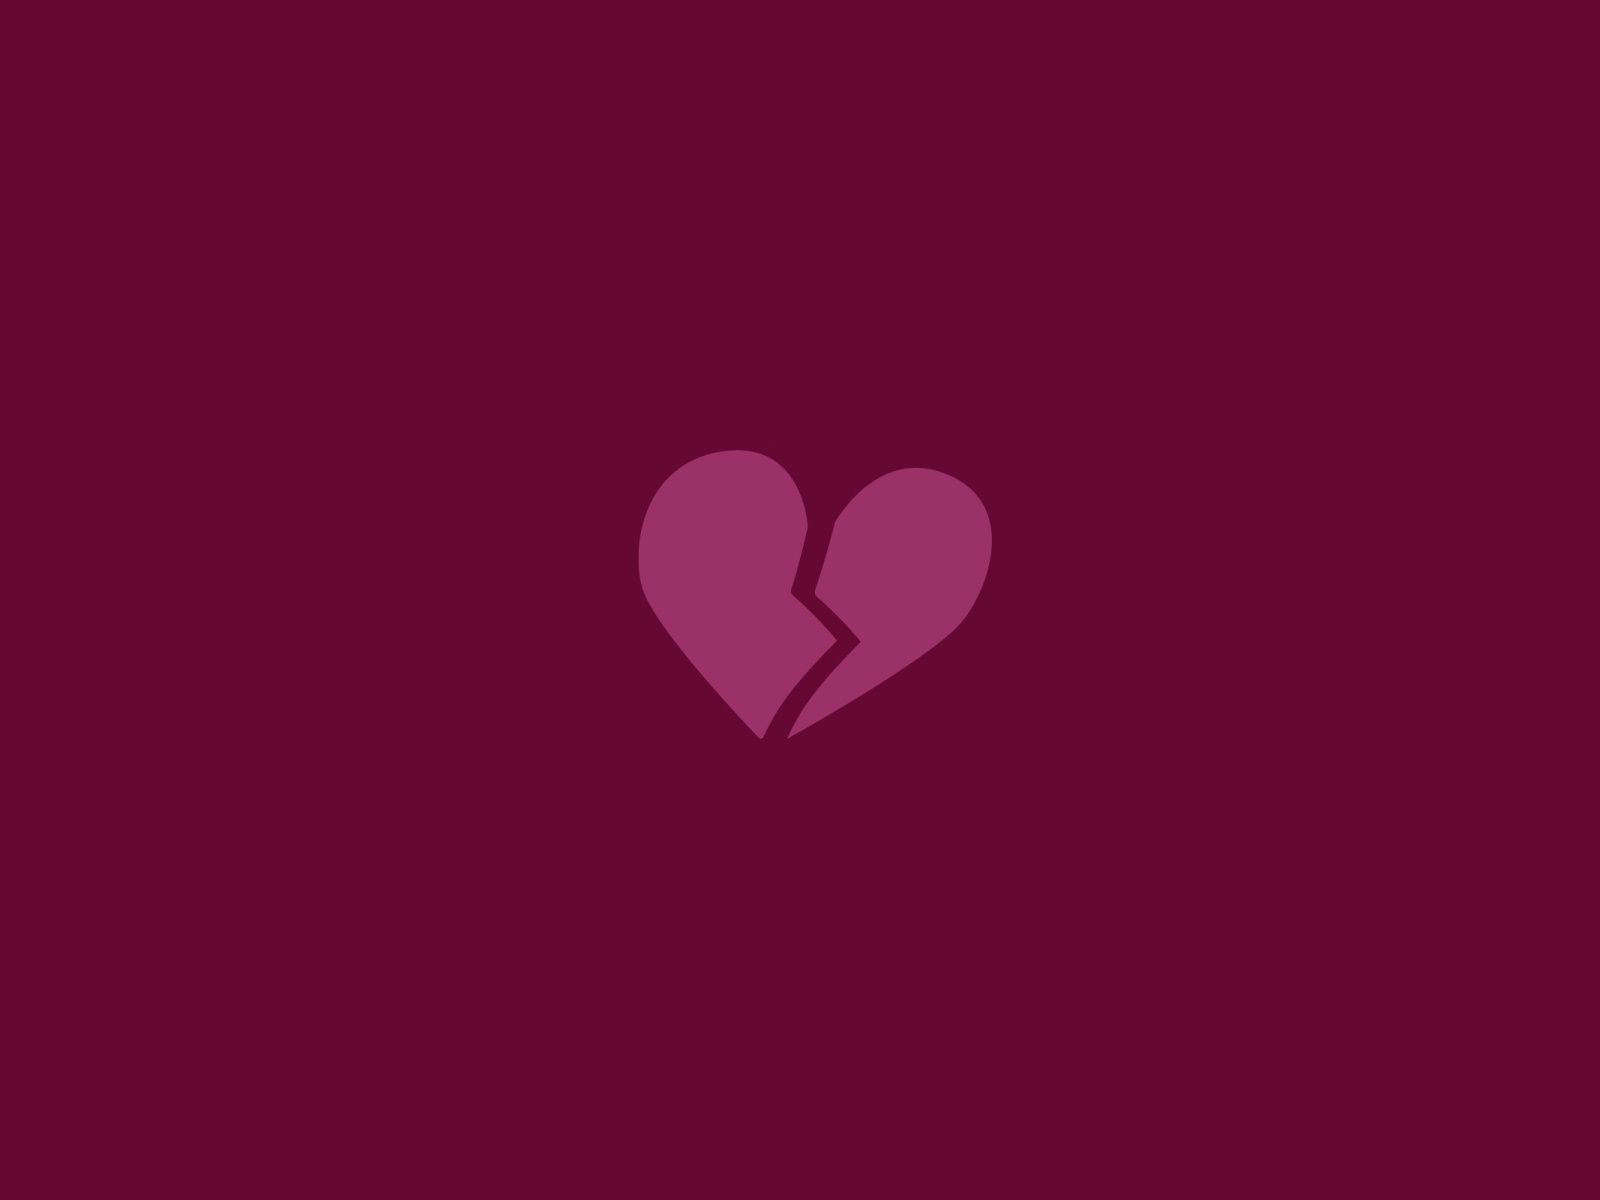 Minimalist Heart Wallpaper. Pink Heart Wallpaper, Emoji We Heart It Wallpaper and Heart Wallpaper